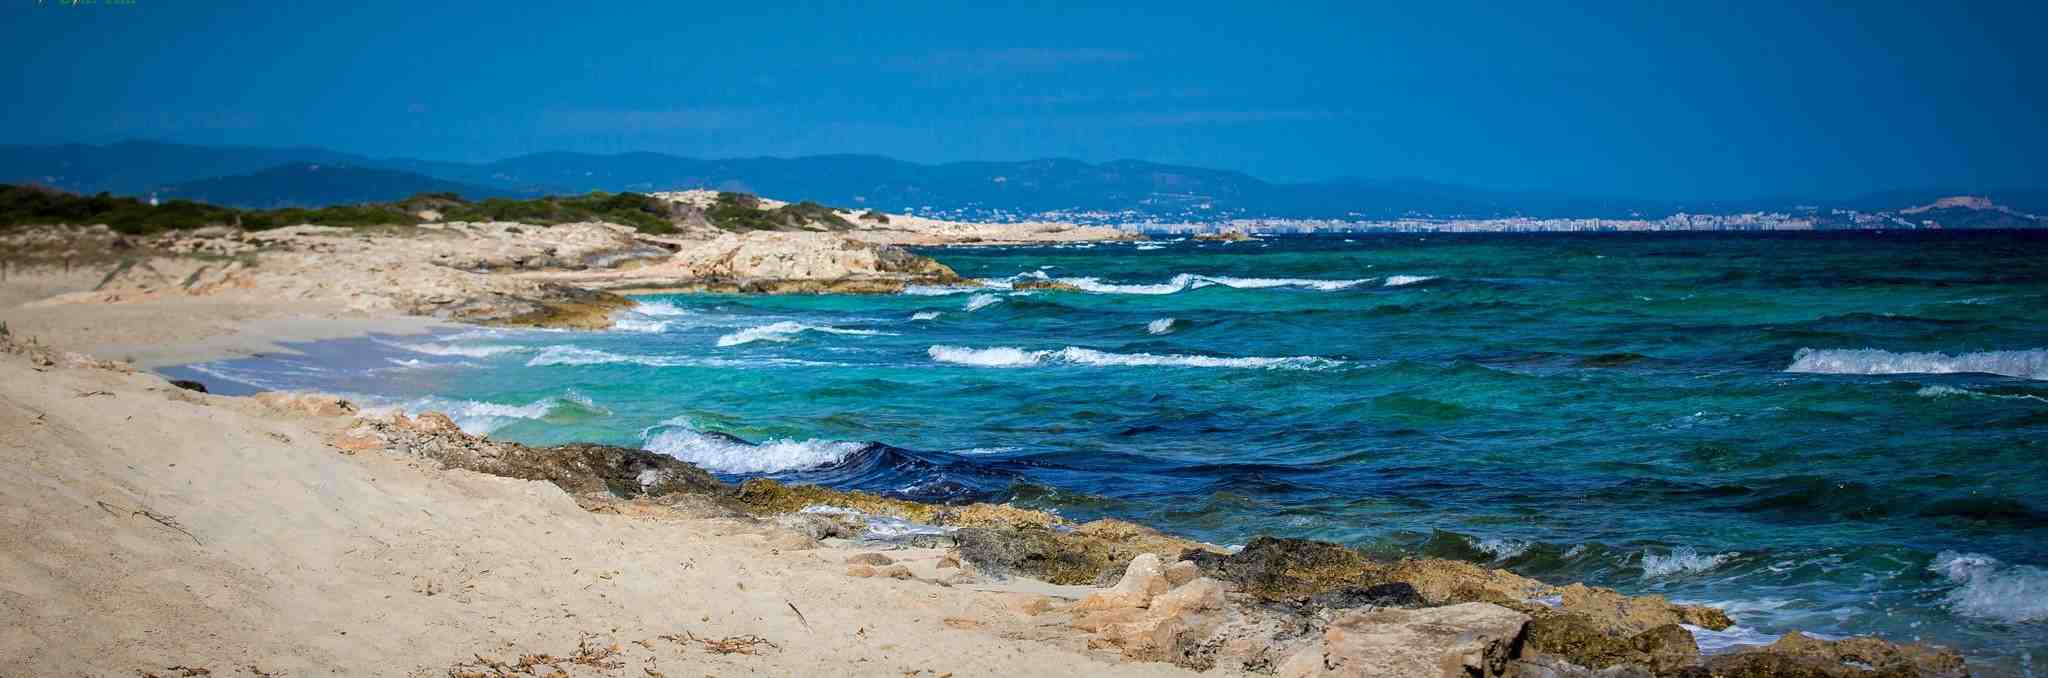 Rejsy morskie - Baleary